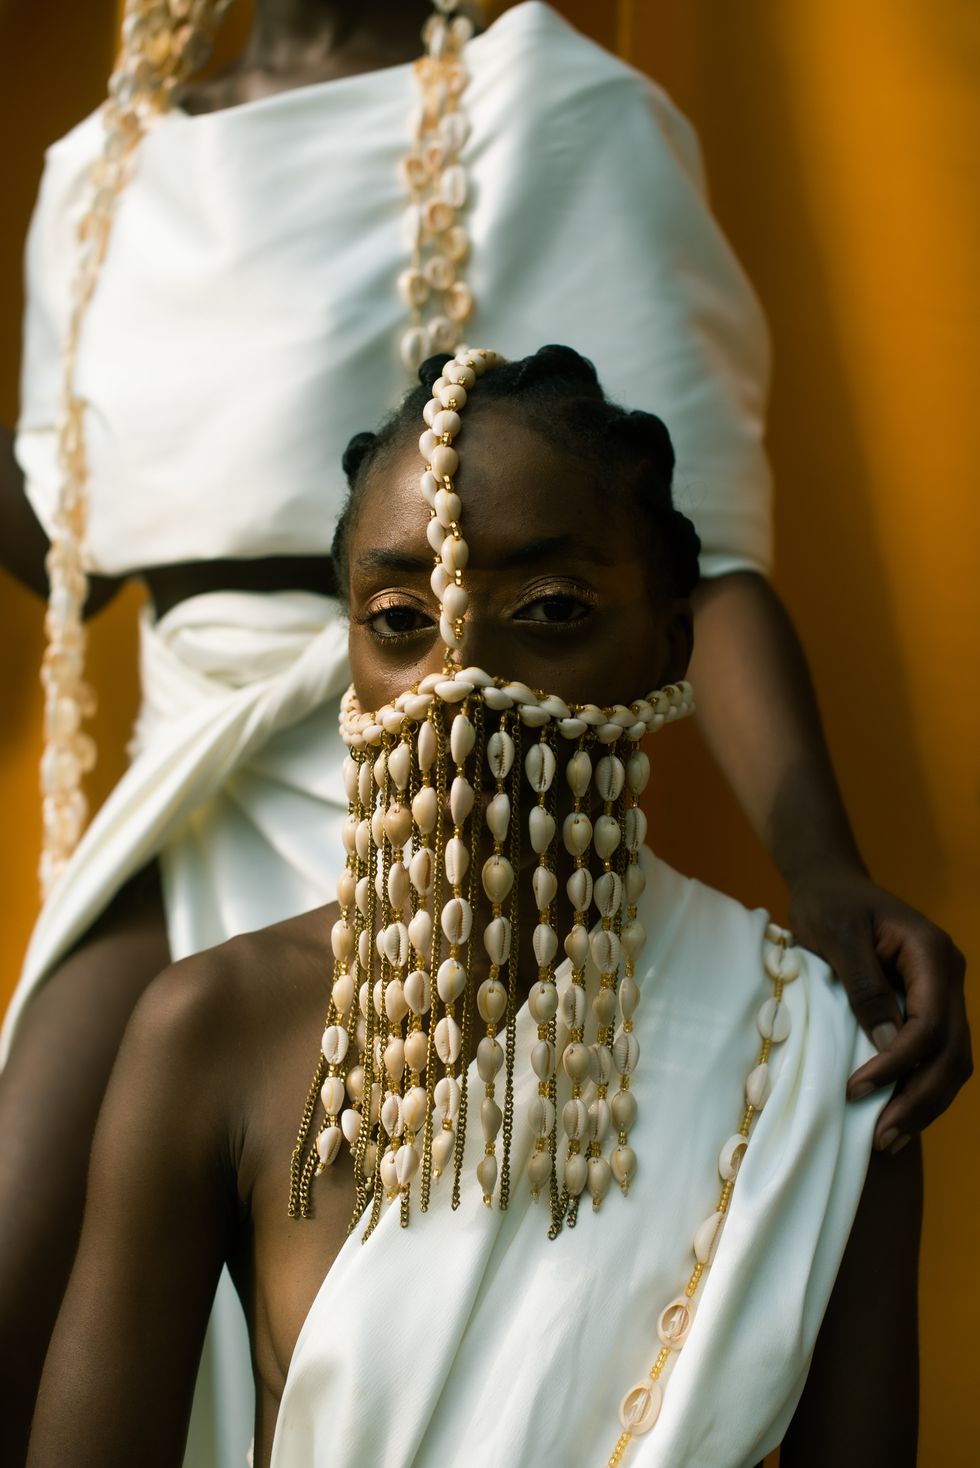 Saphir Niakadie's work connects her homeland and the diaspora